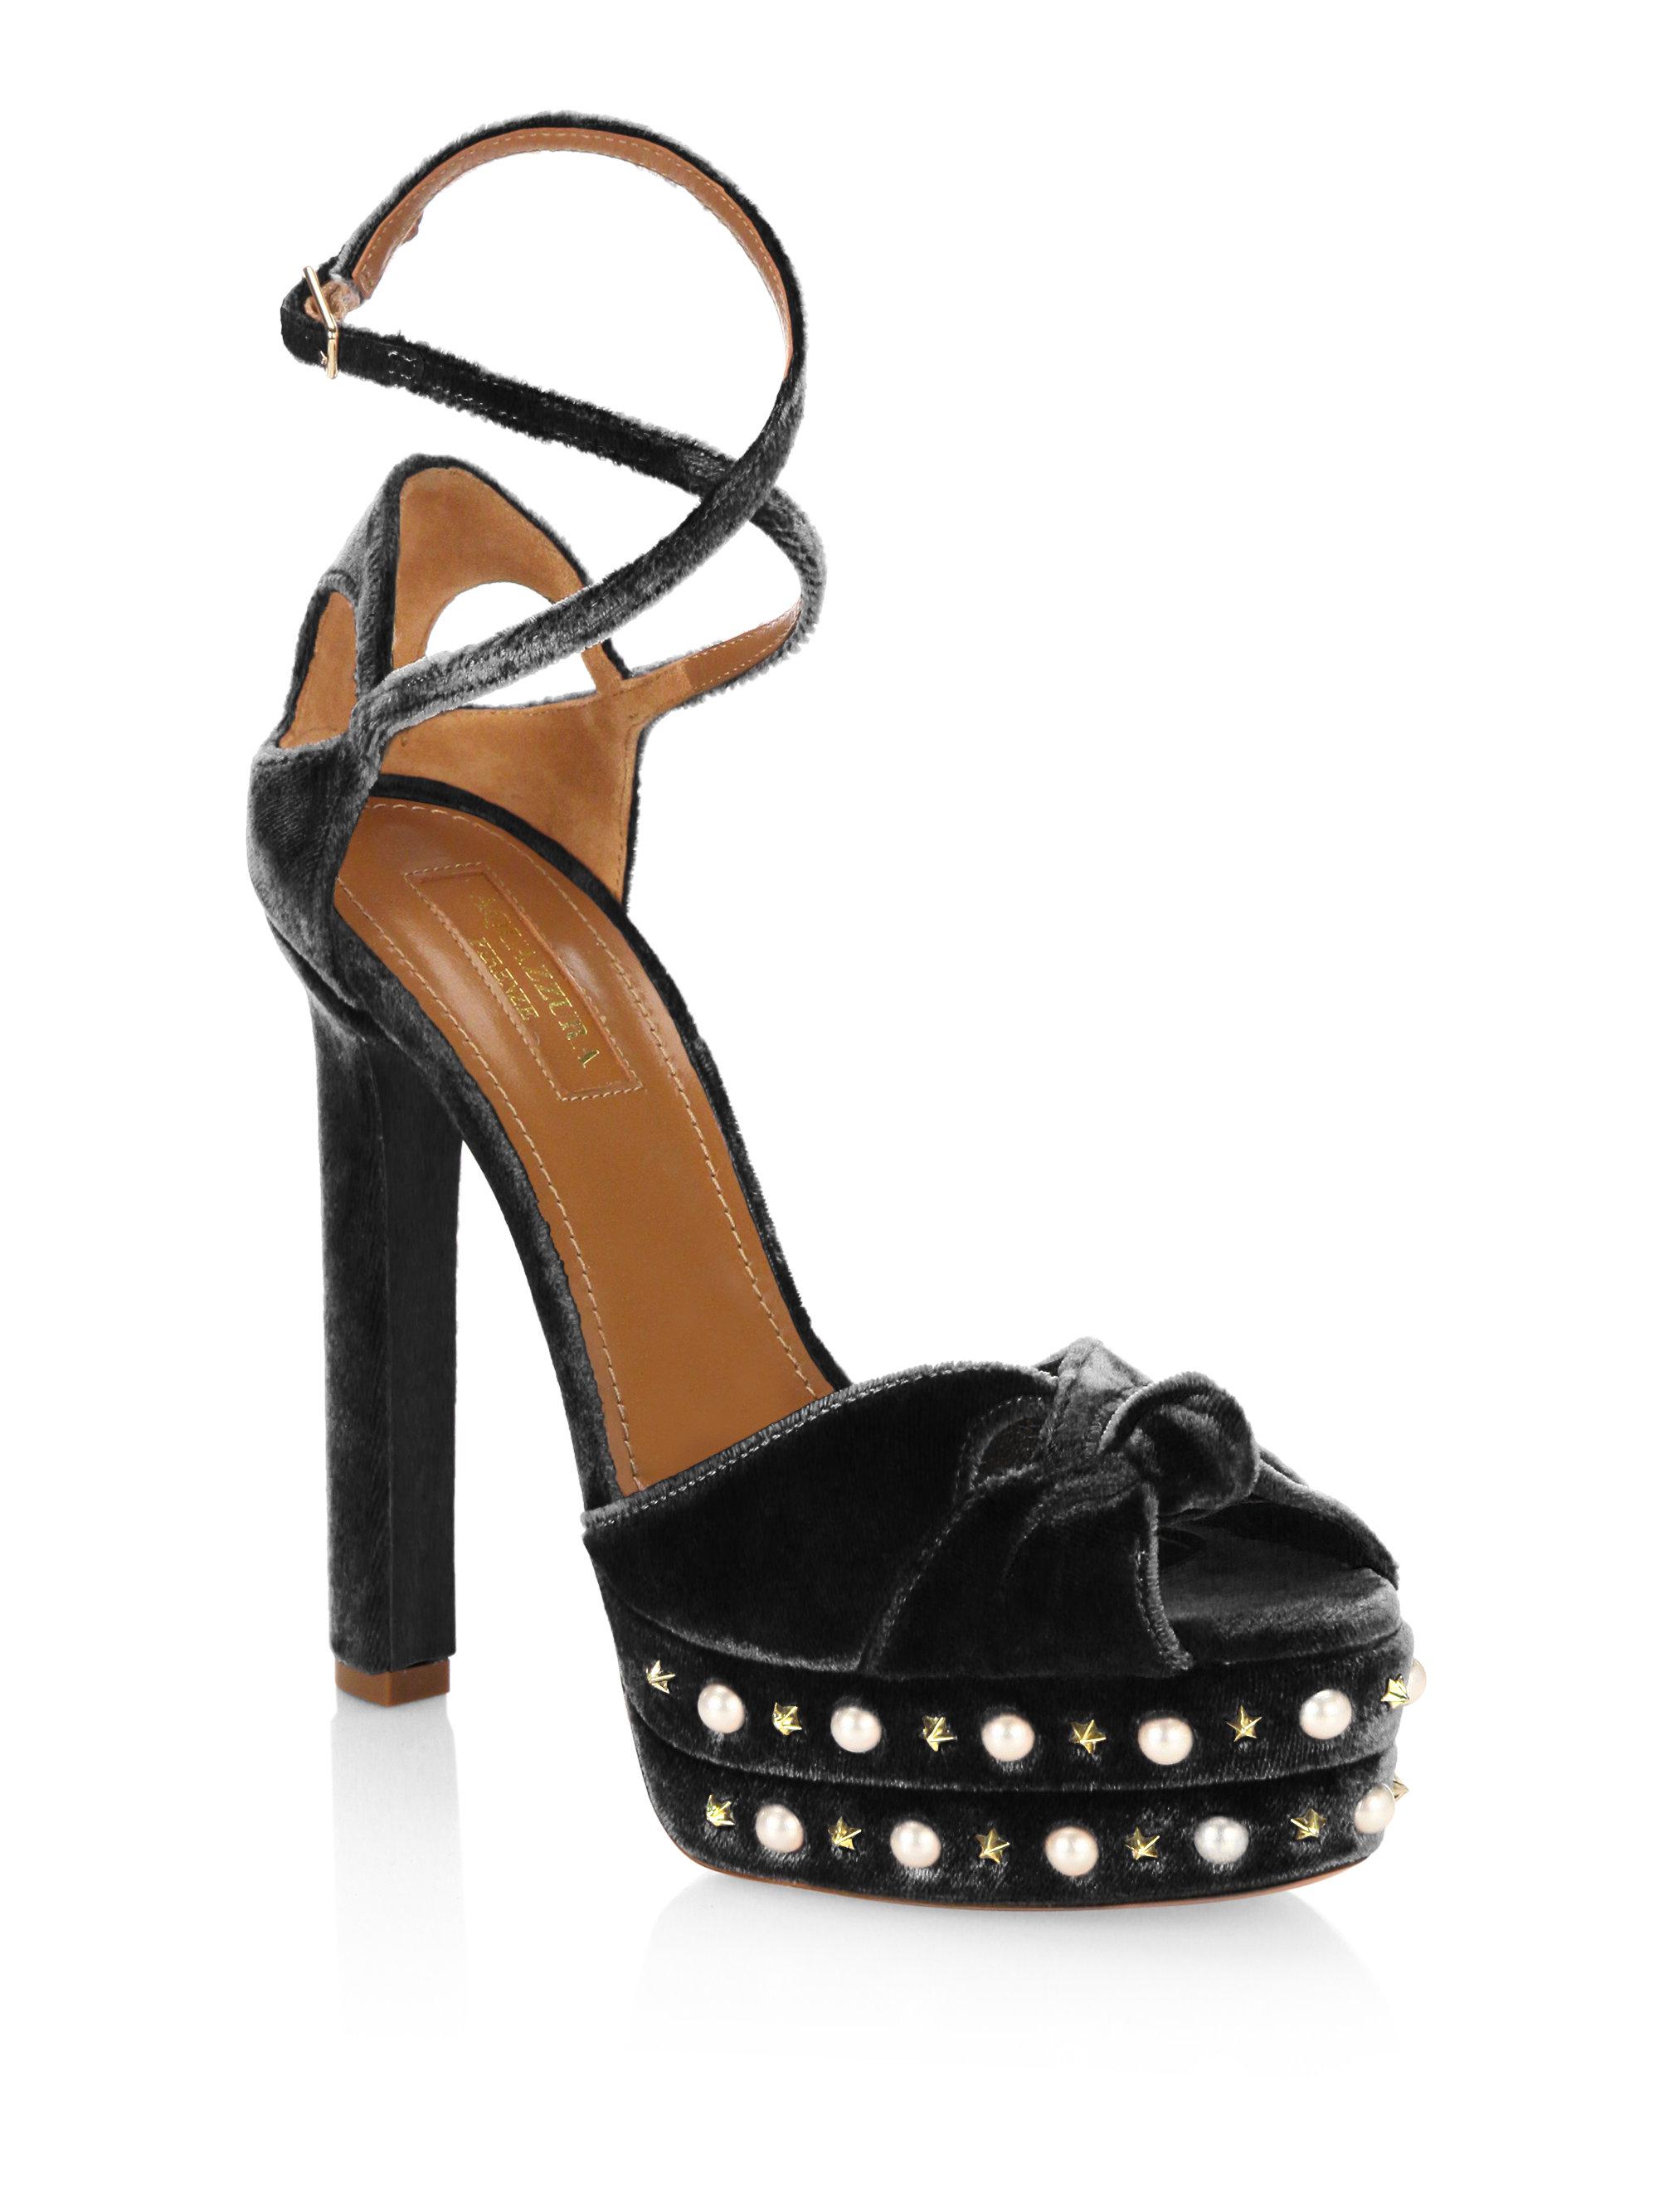 Lyst - Aquazzura Harlow Velvet Pearls Platform Sandals in Black